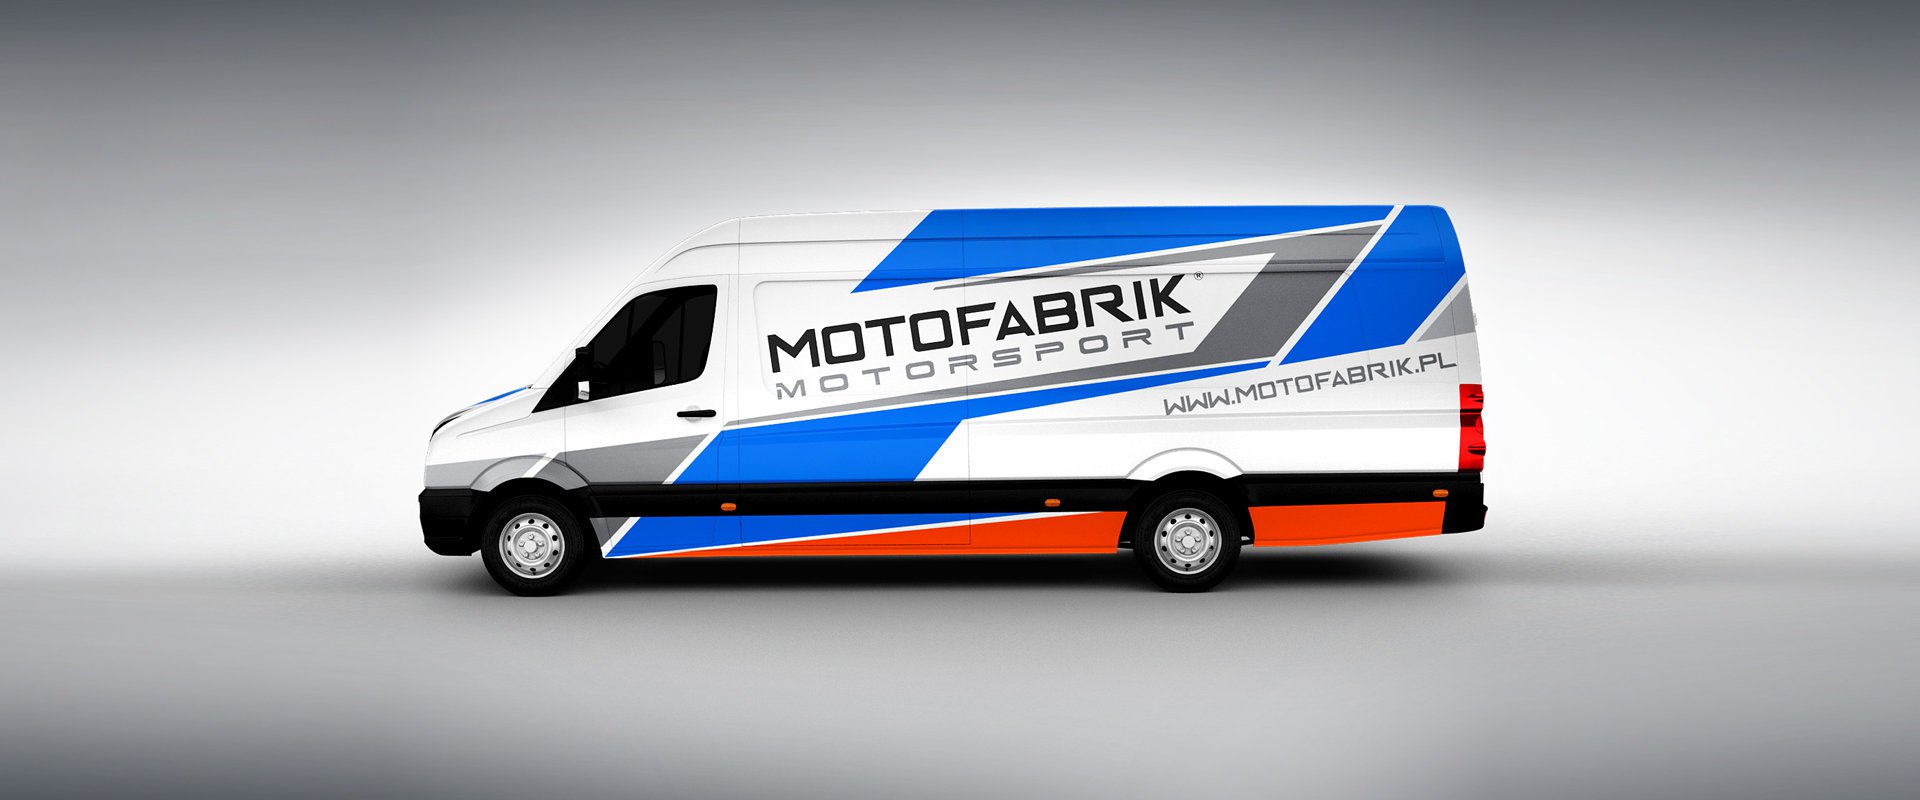 MotoFabrik Motorsport #2